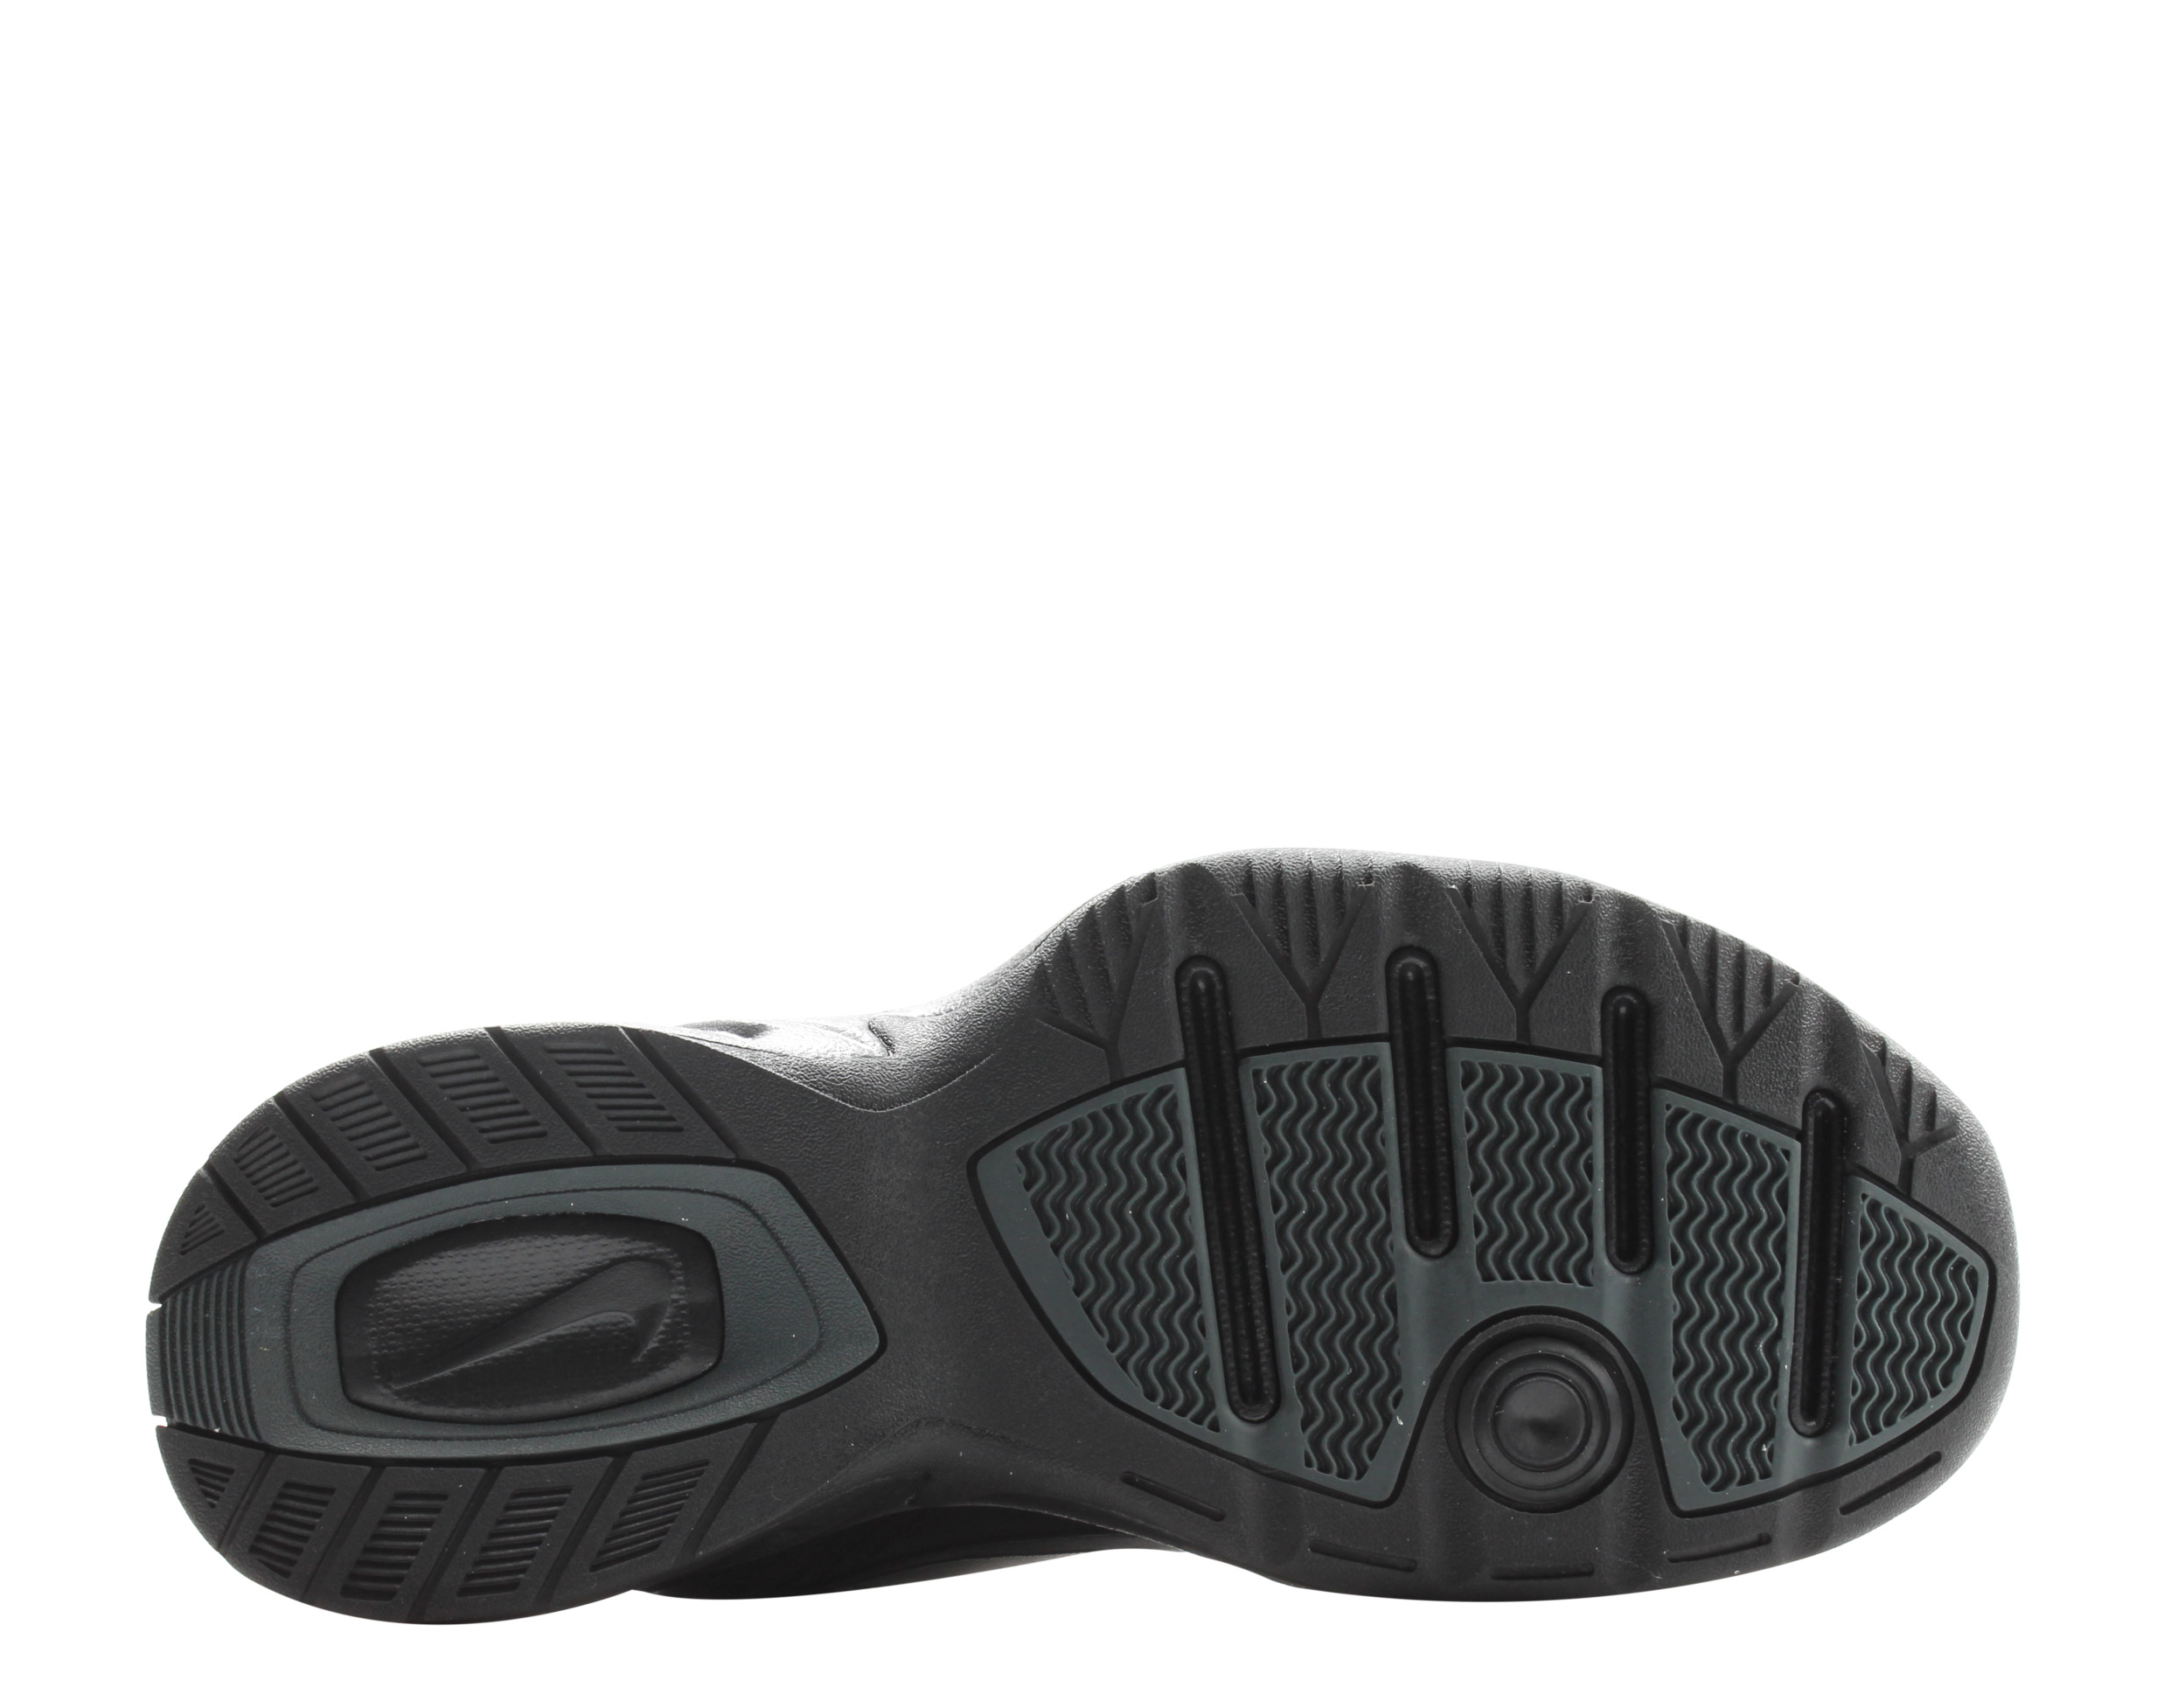 Nike Air Monach IV Men's Cross Training Shoes Size 9M - image 5 of 6